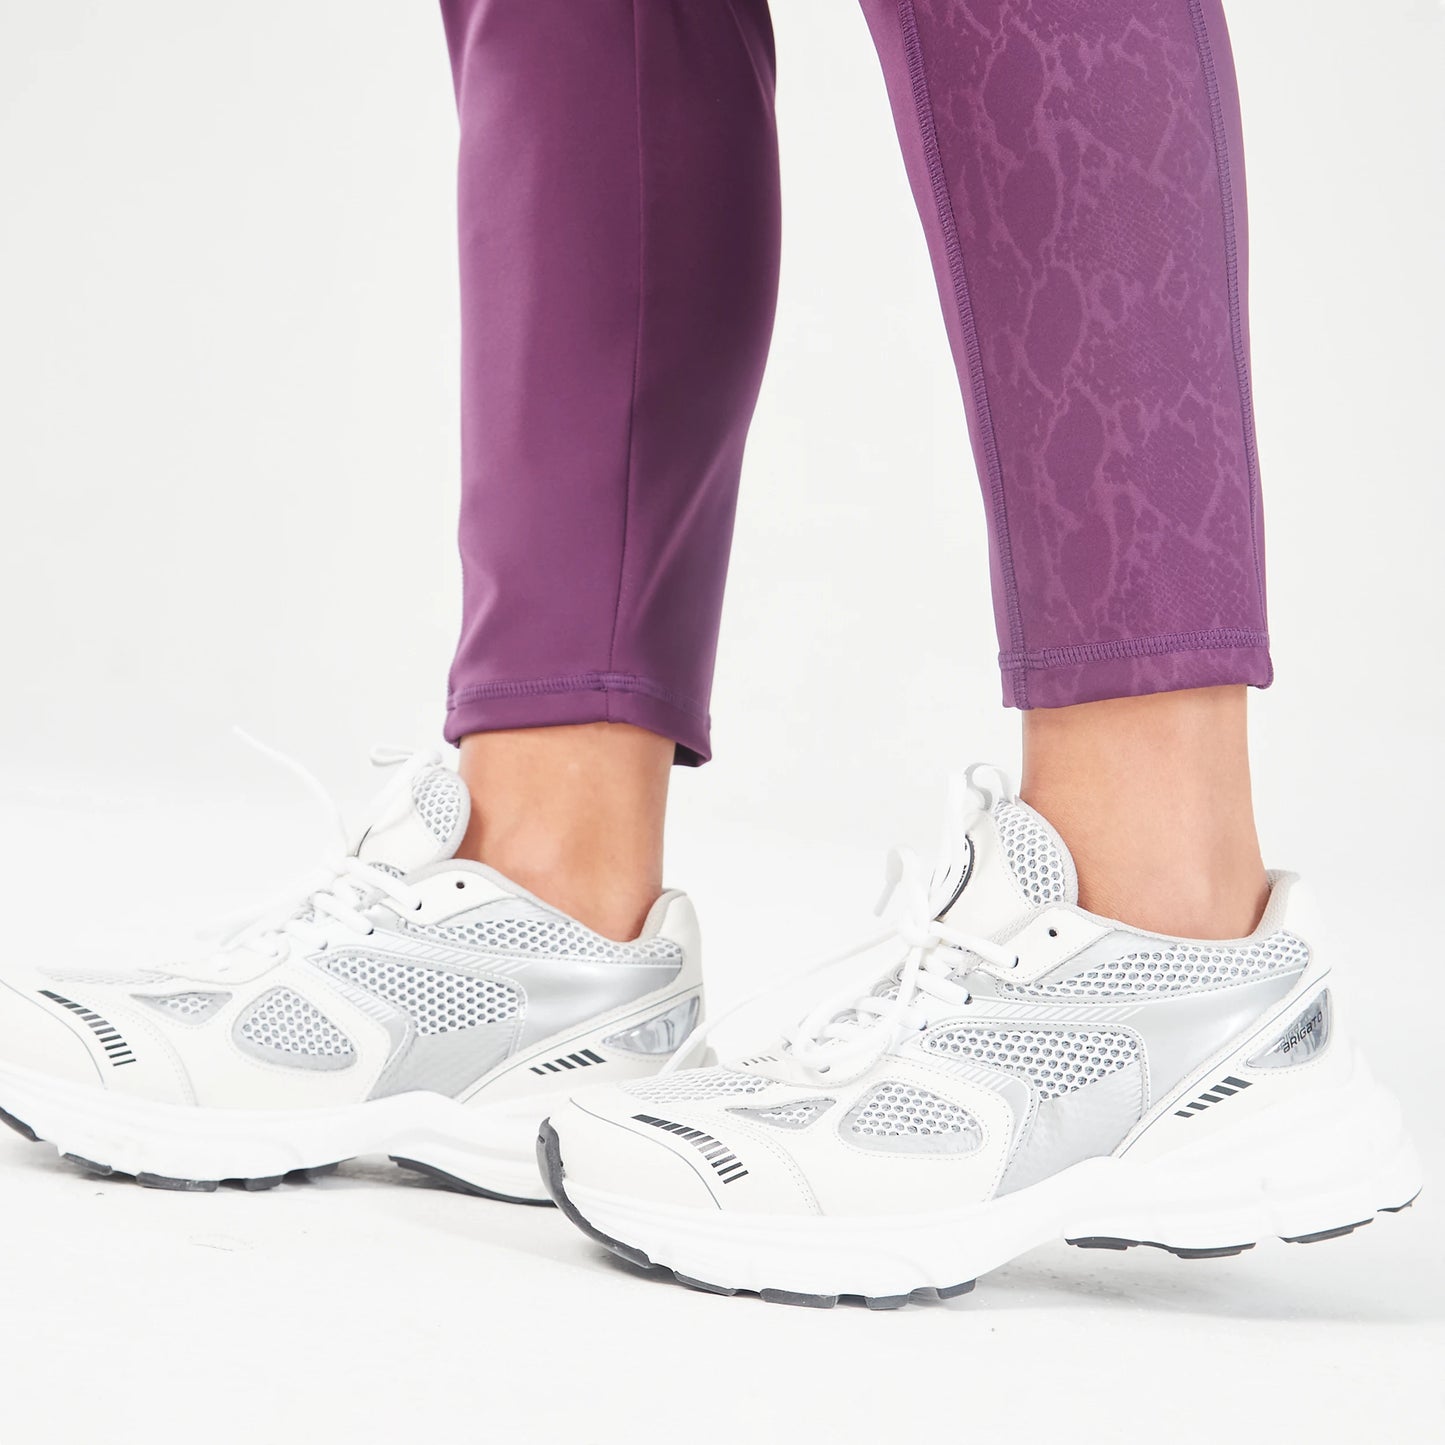 squatwolf-workout-clothes-core-track-pants-shadow-purple-gym-pants-for-women